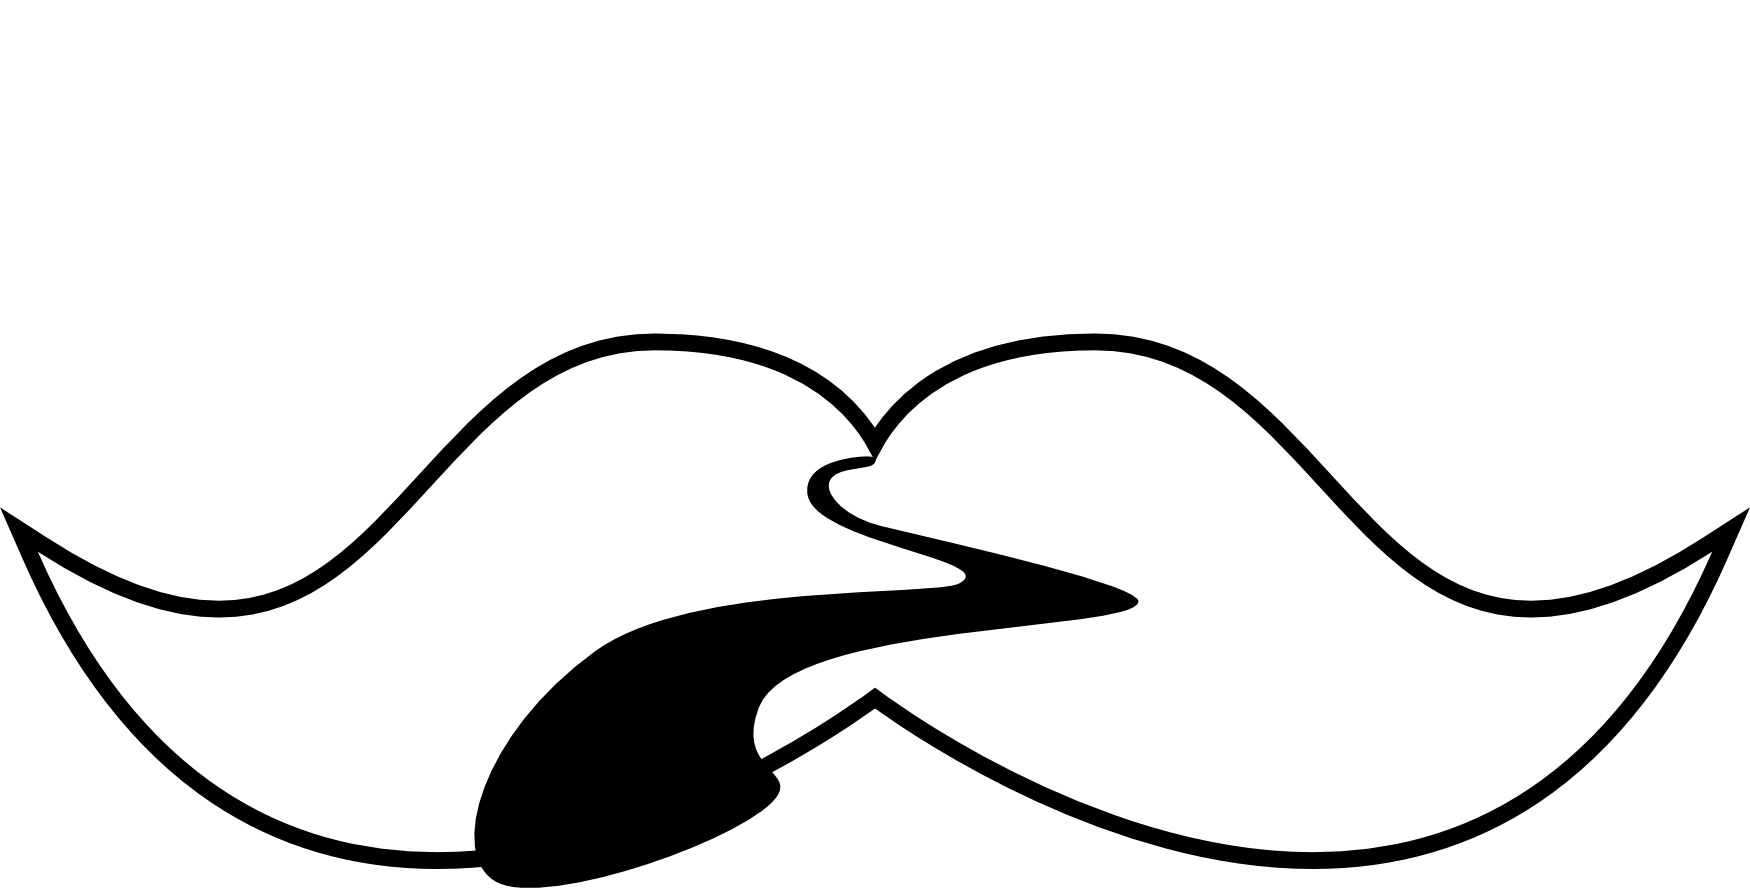 RaftRace_2019_draft3